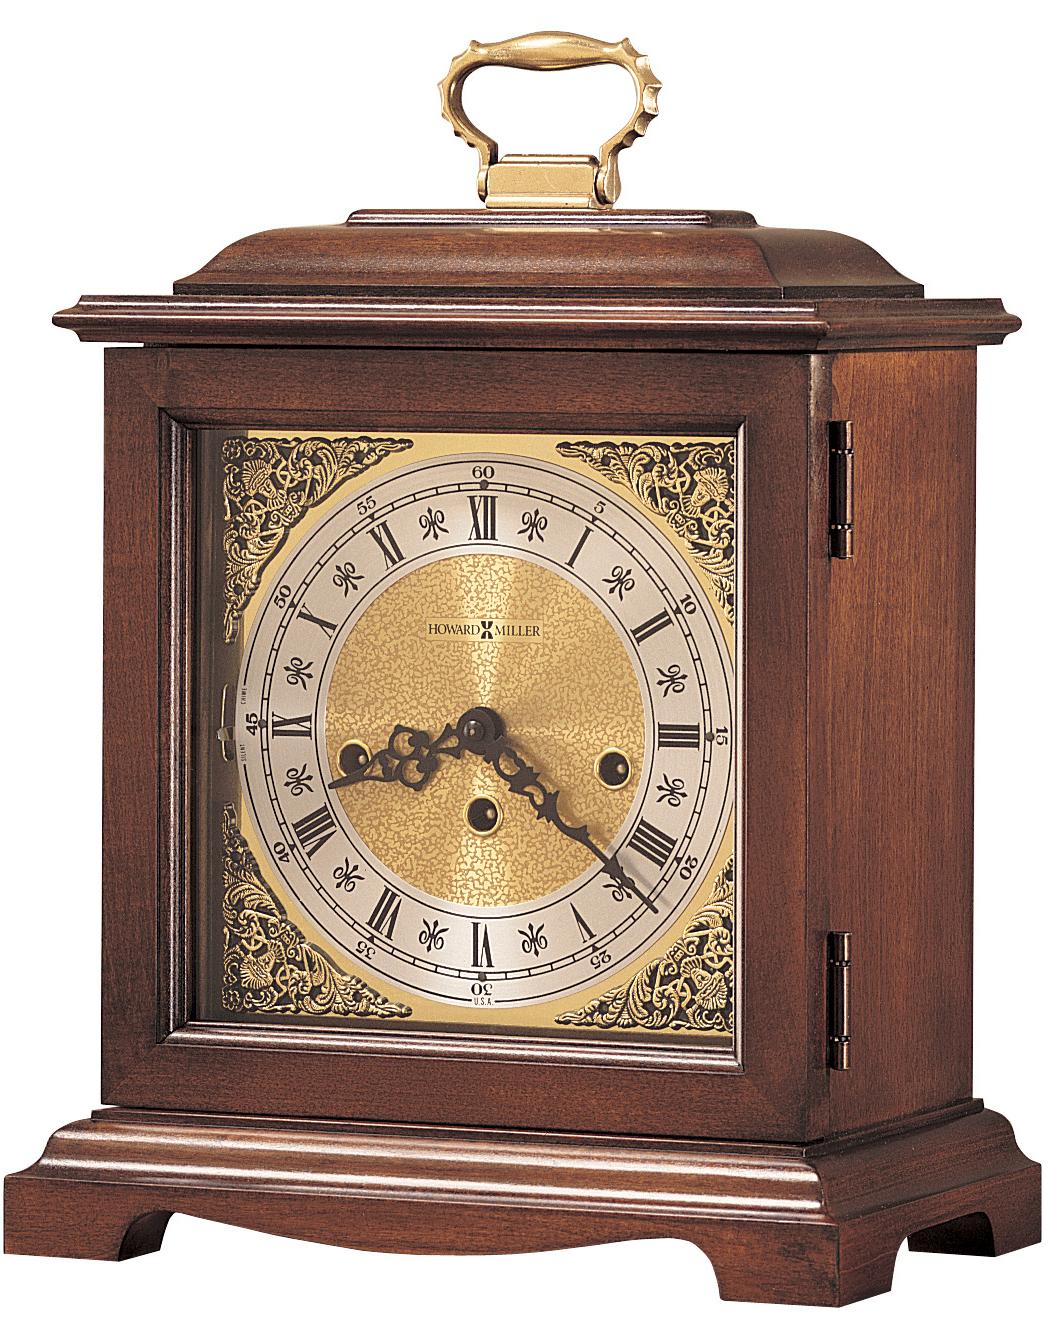 Graham Bracket Mantel Clock